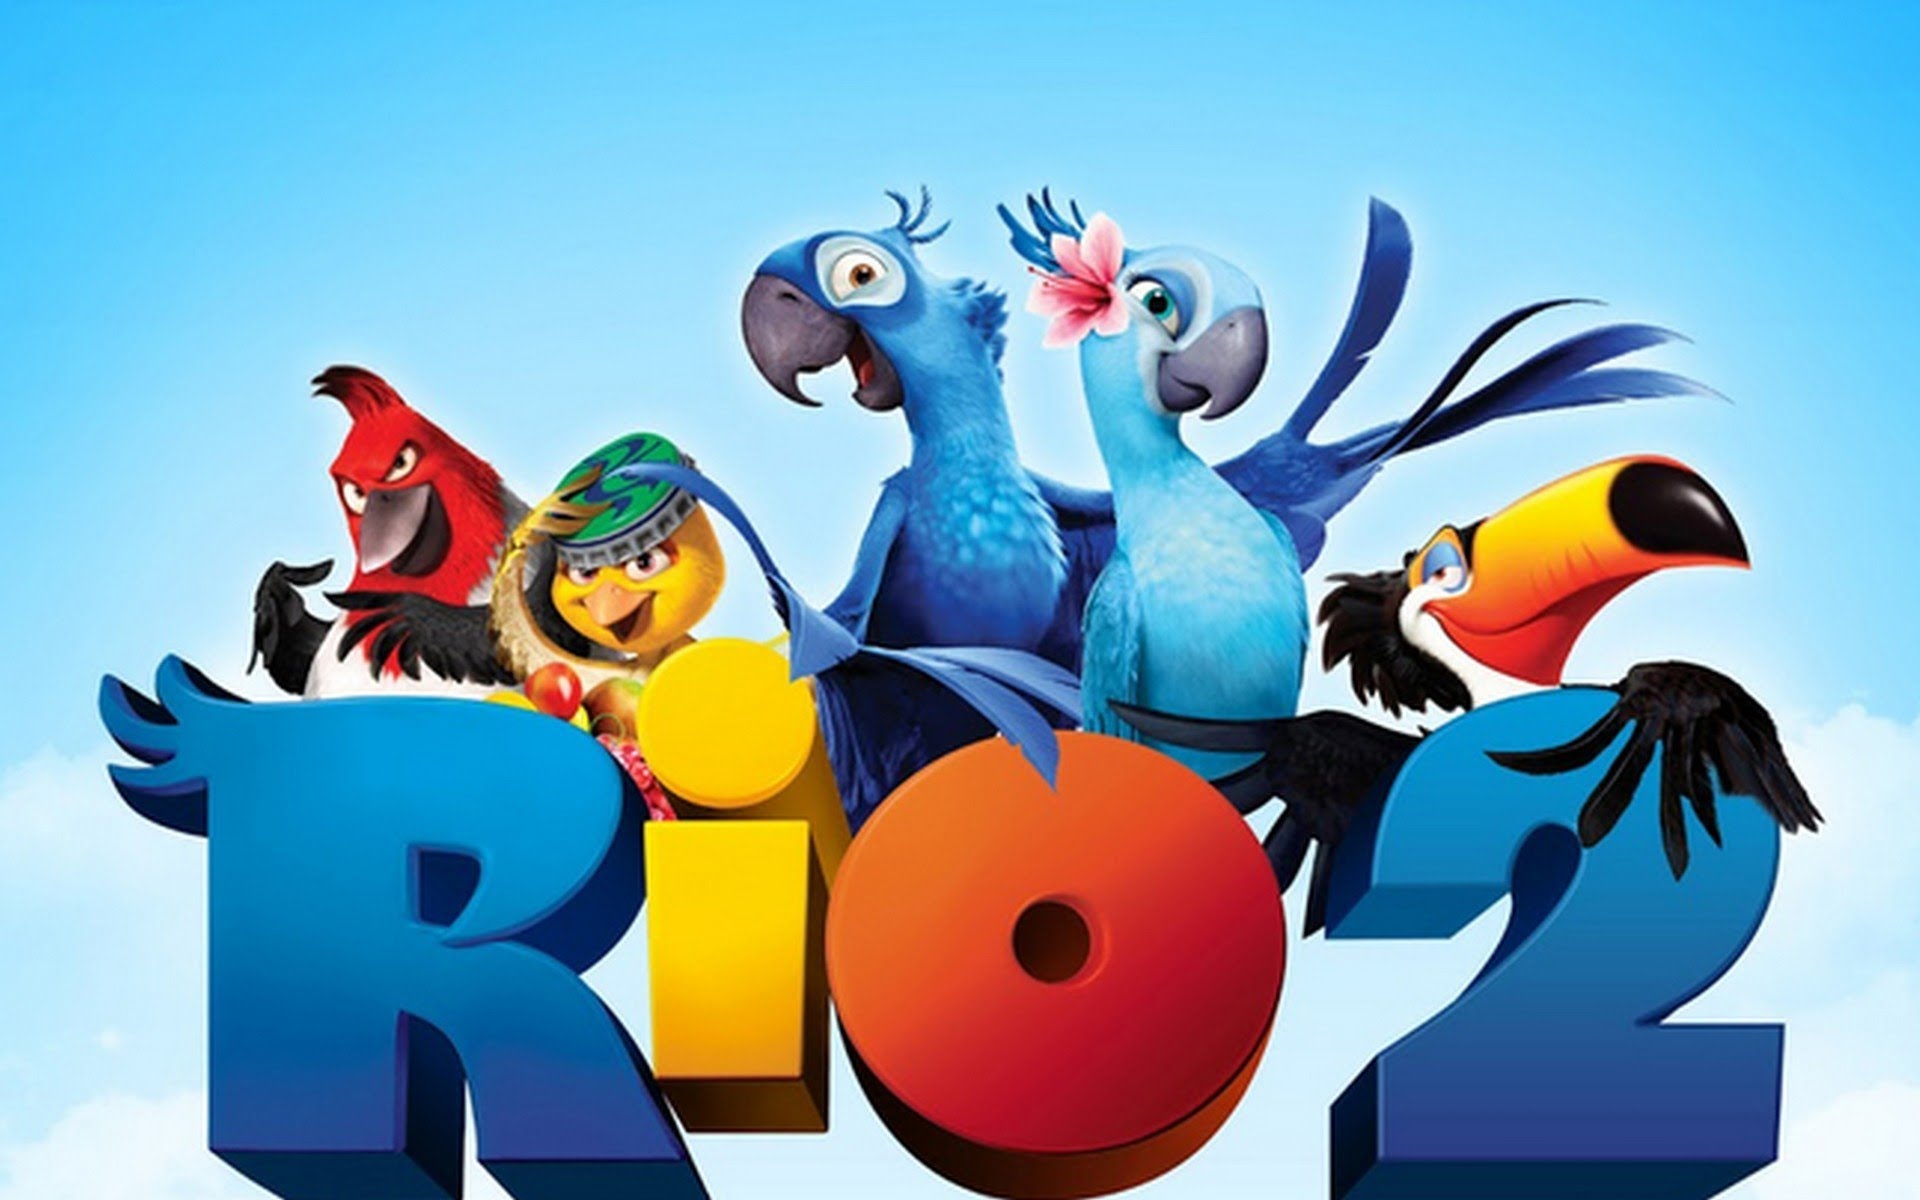 Rio 2 Full Movie Game 2014 - Rio 2 Movie Games ( English Version ) Rio 2